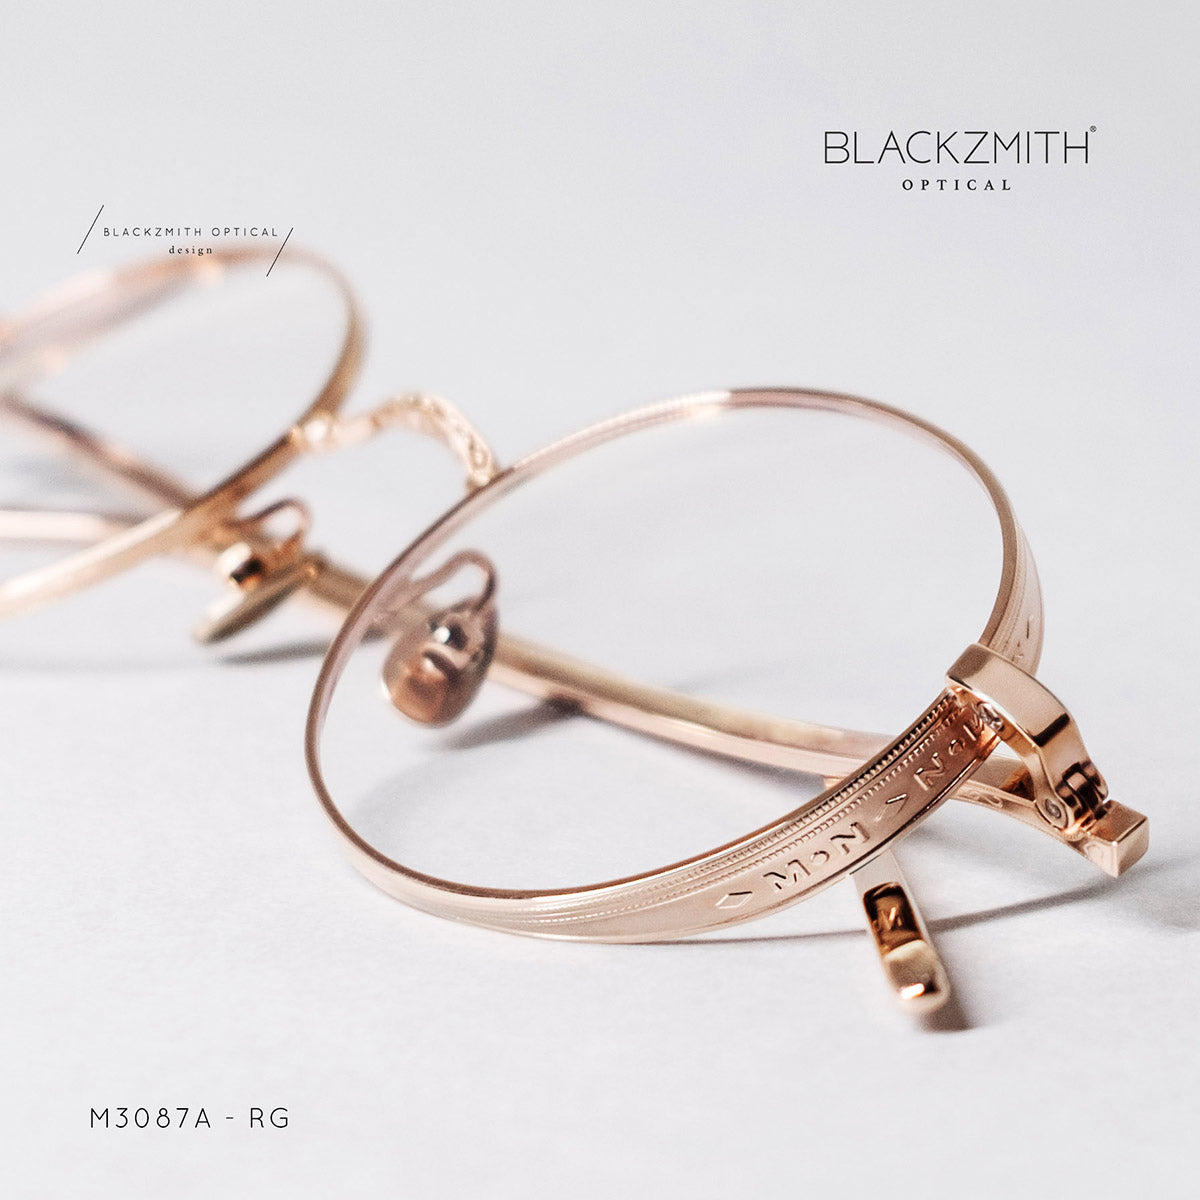 Blackzmith x Matsuda - M3087A 限量木盒套裝【 Blackzmith Exclusive Limited Edition】